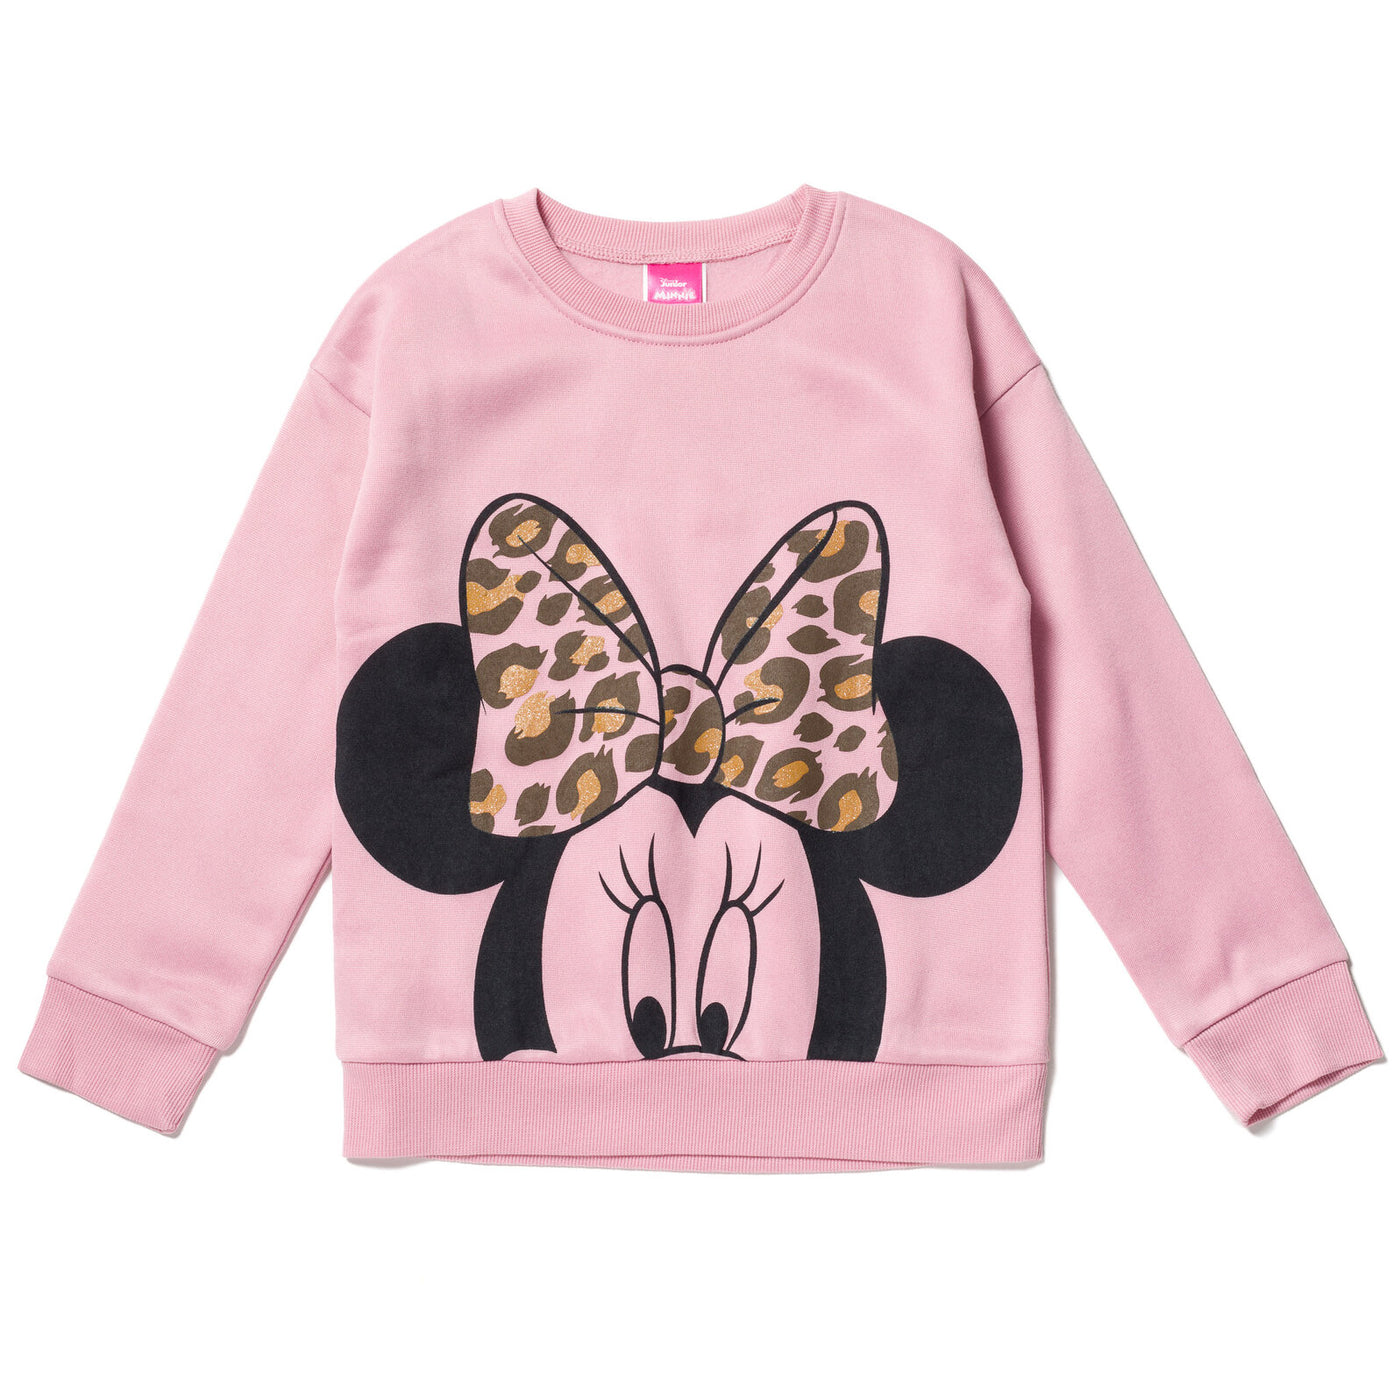 Disney Minnie Mouse Girls Fleece Sweatshirt And Leggings Outfit